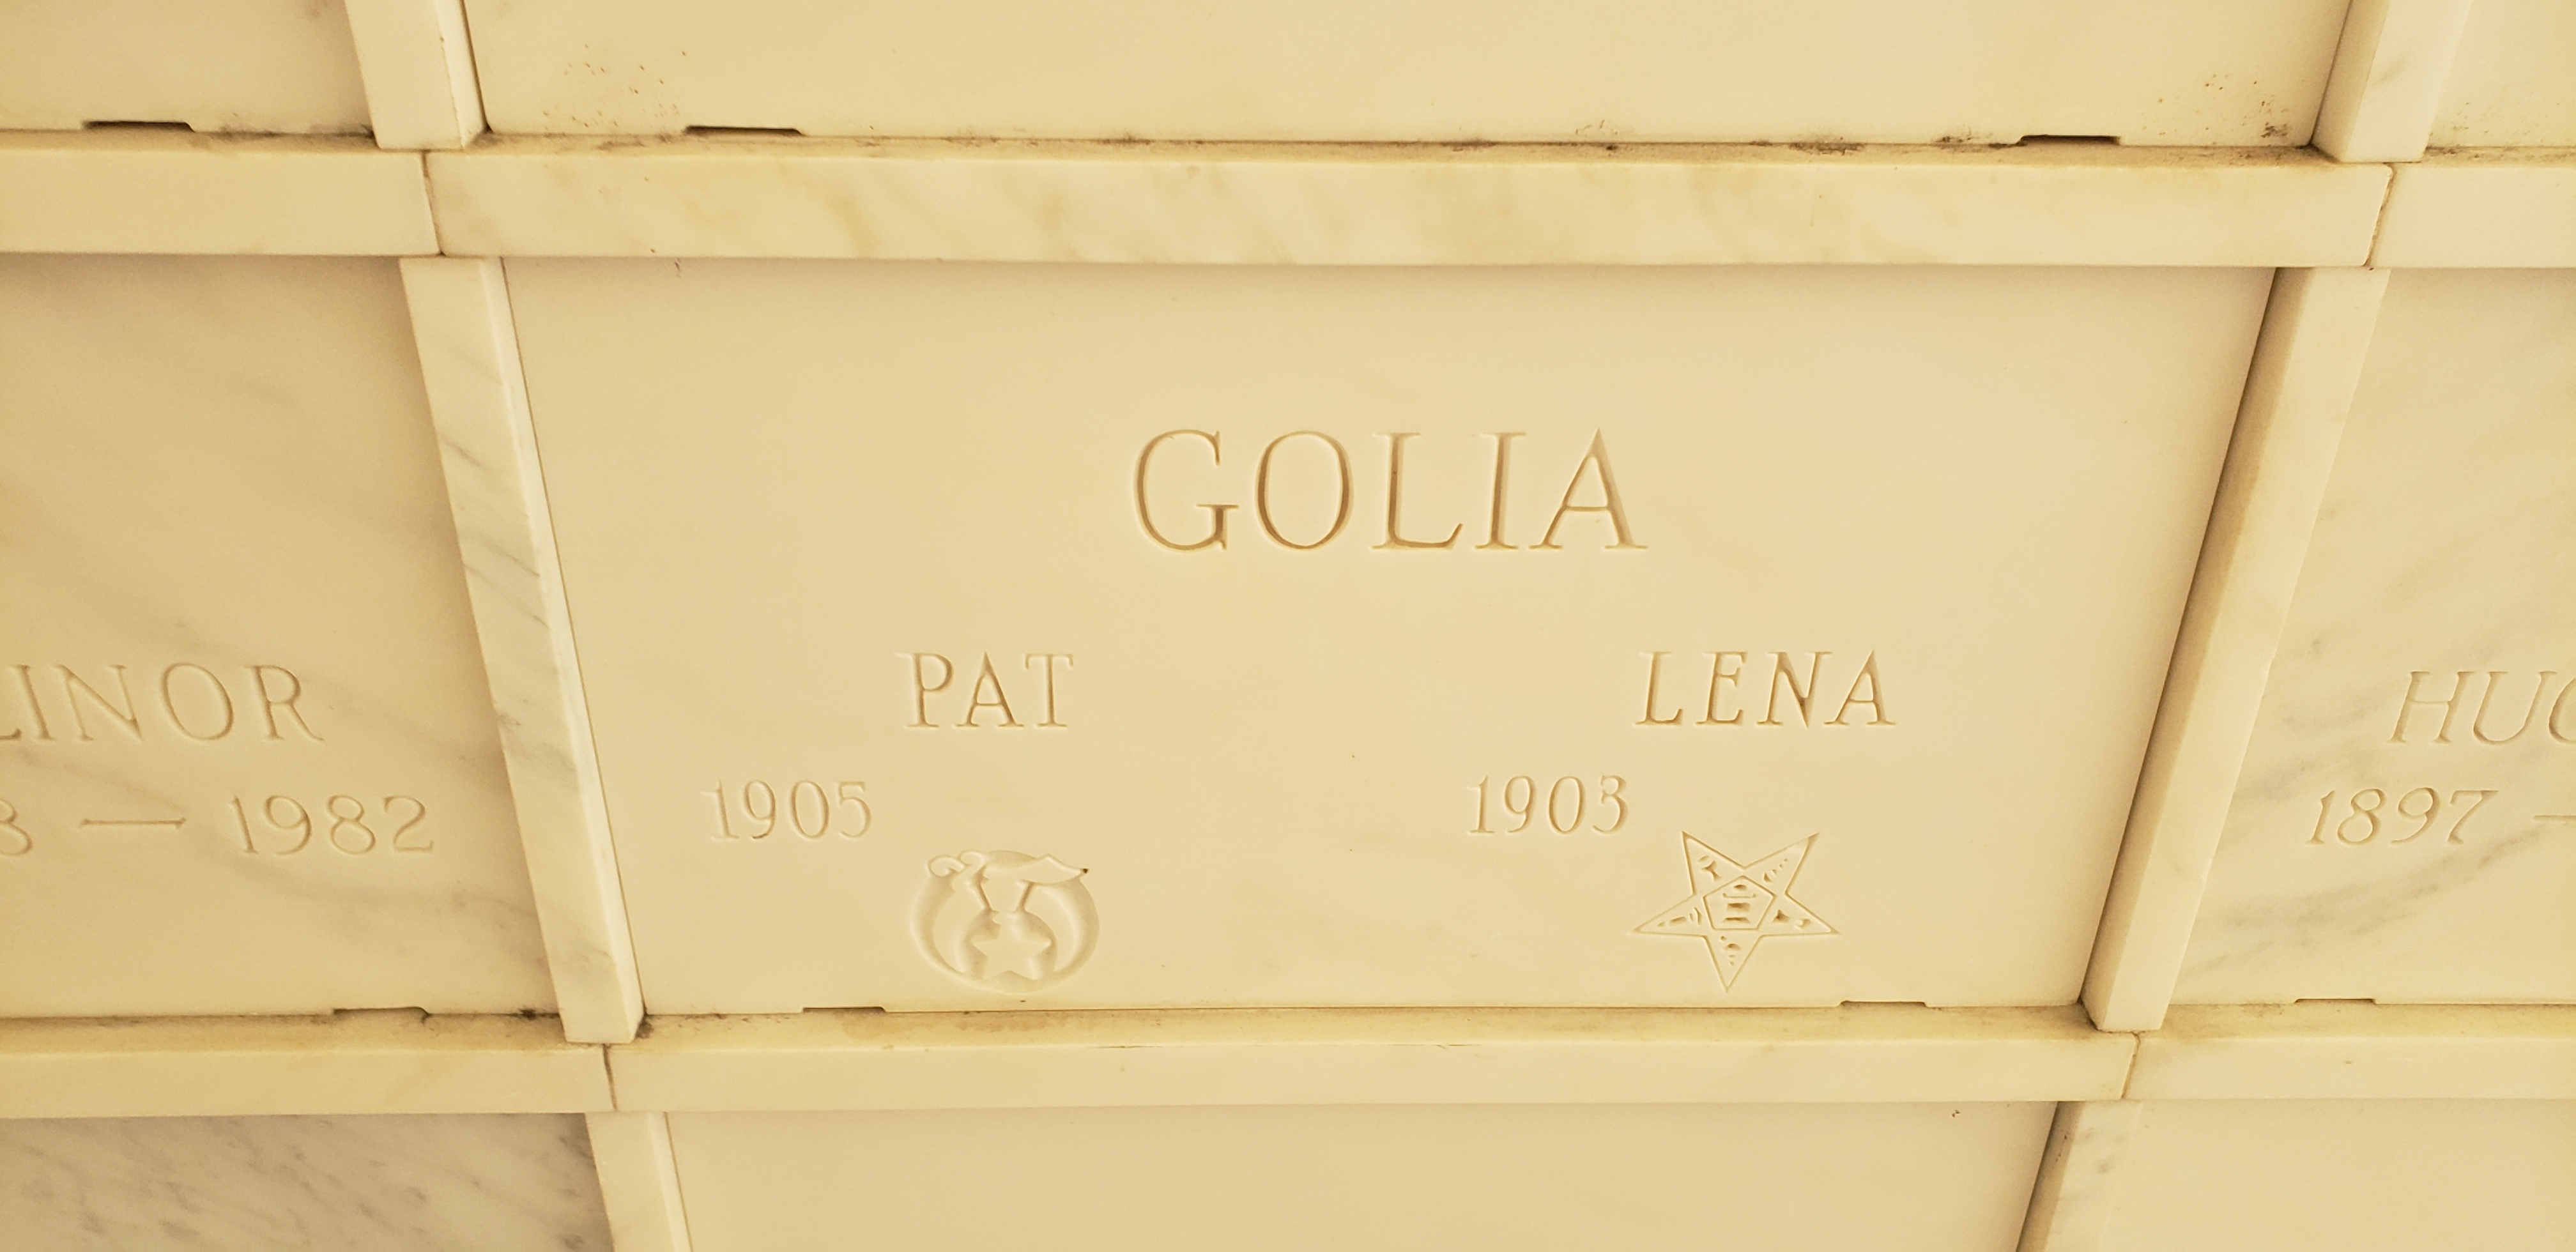 Lena Golia